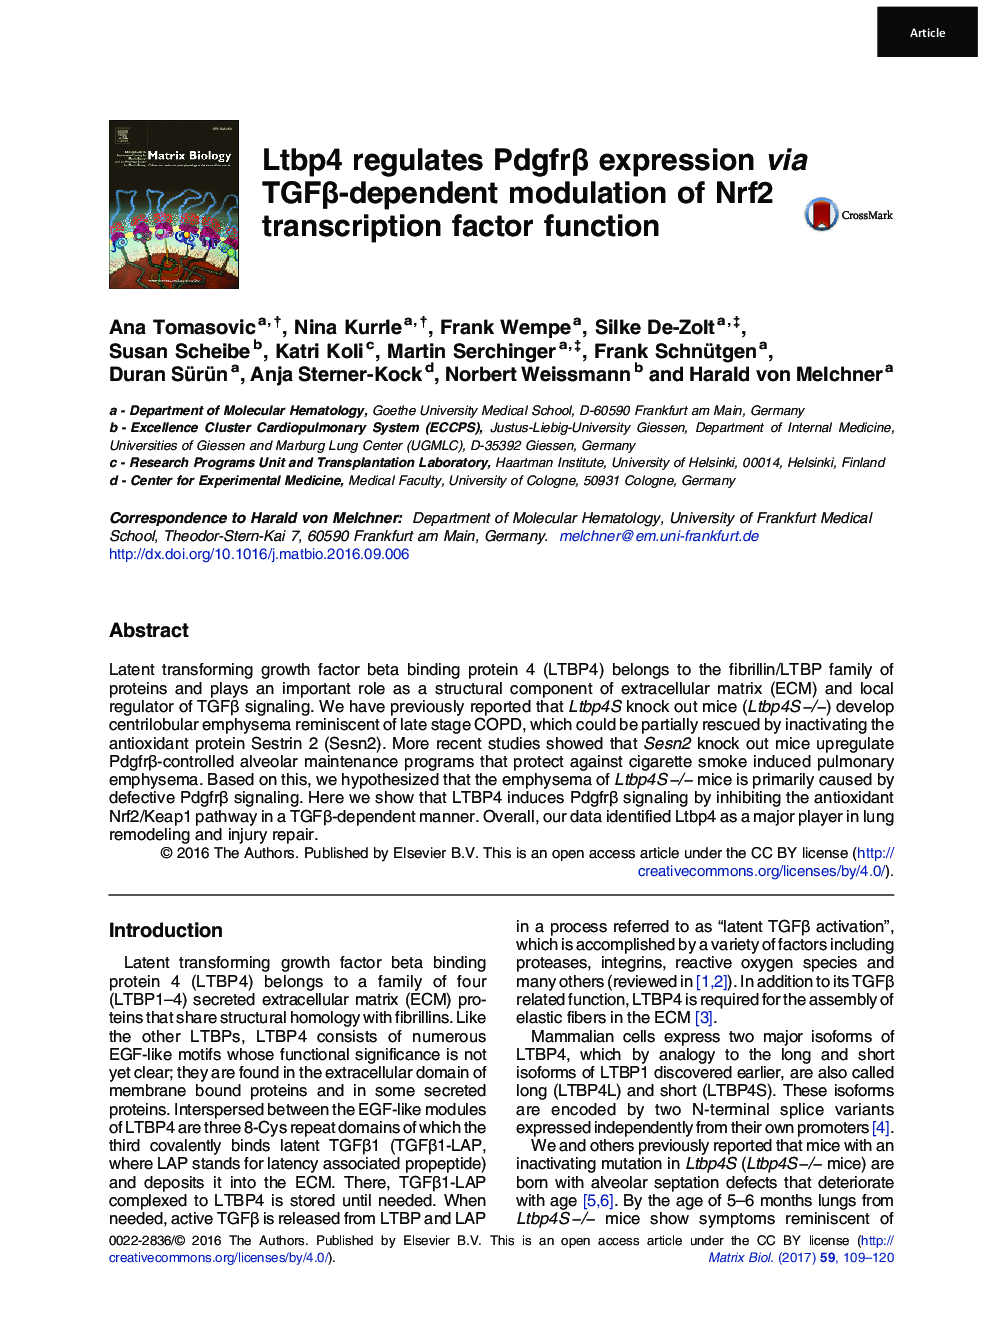 Ltbp4 regulates PdgfrÎ² expression via TGFÎ²-dependent modulation of Nrf2 transcription factor function